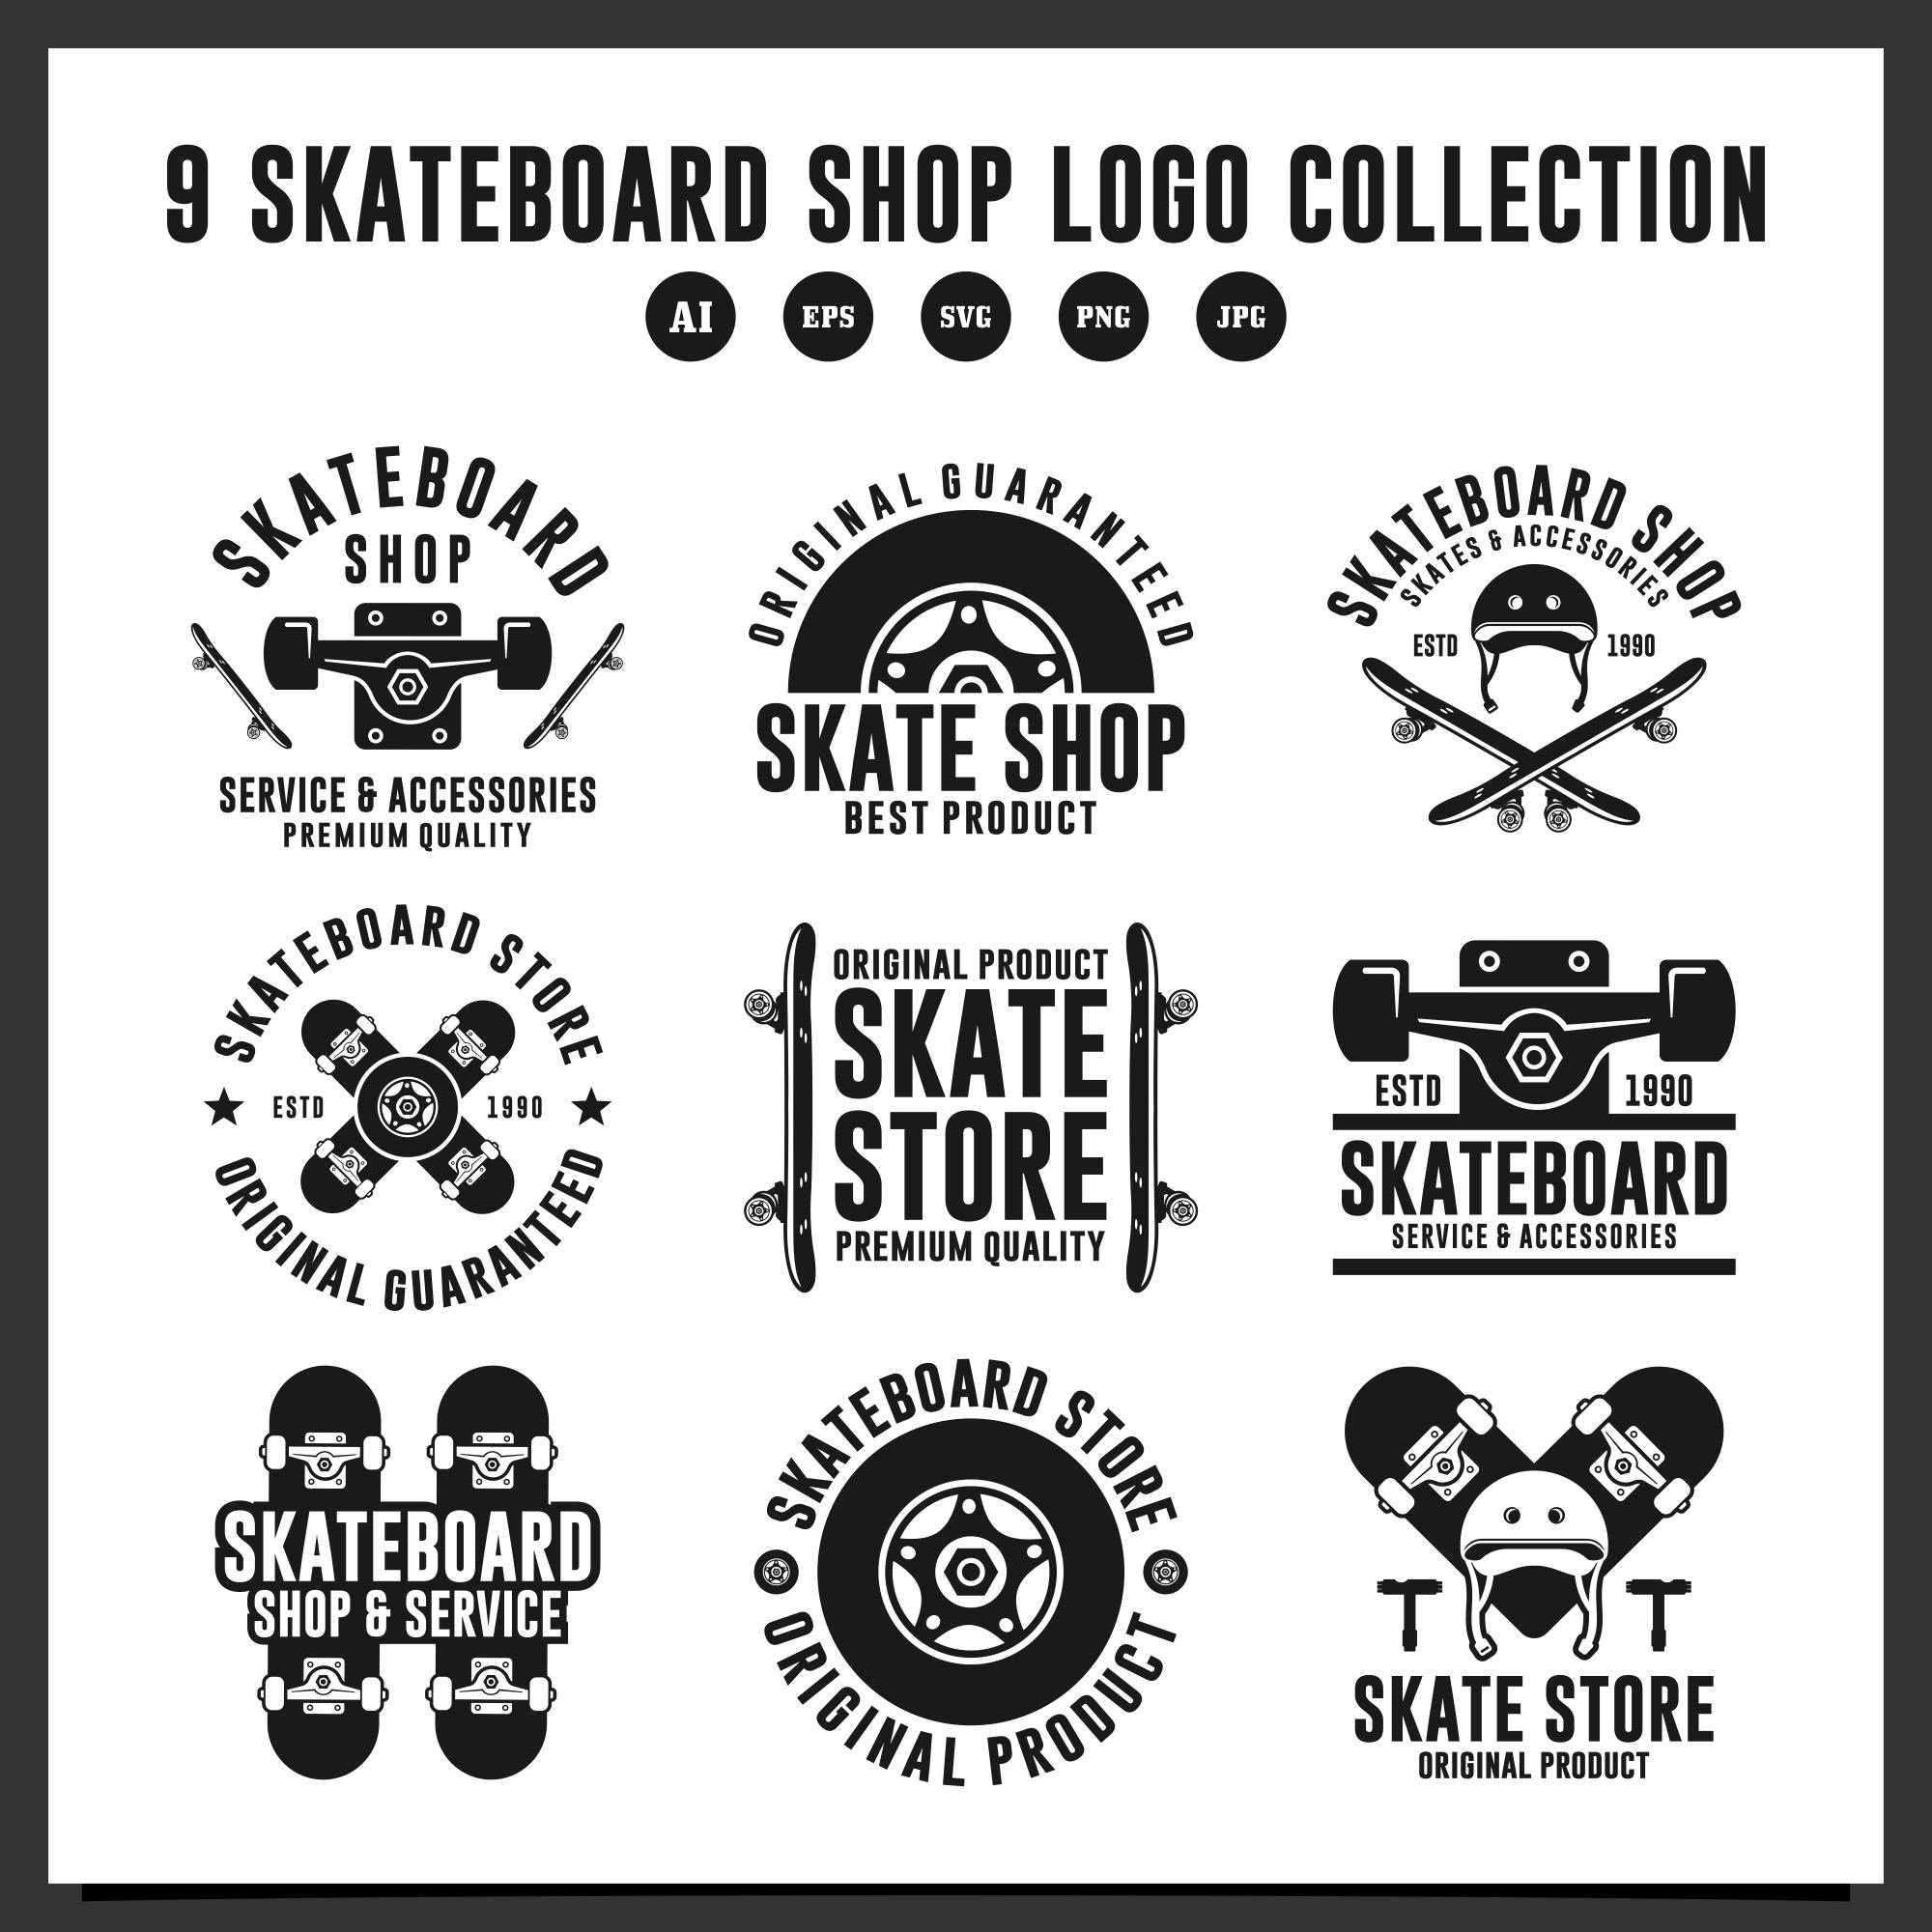 18 Skateboard design logo colllection preview image.